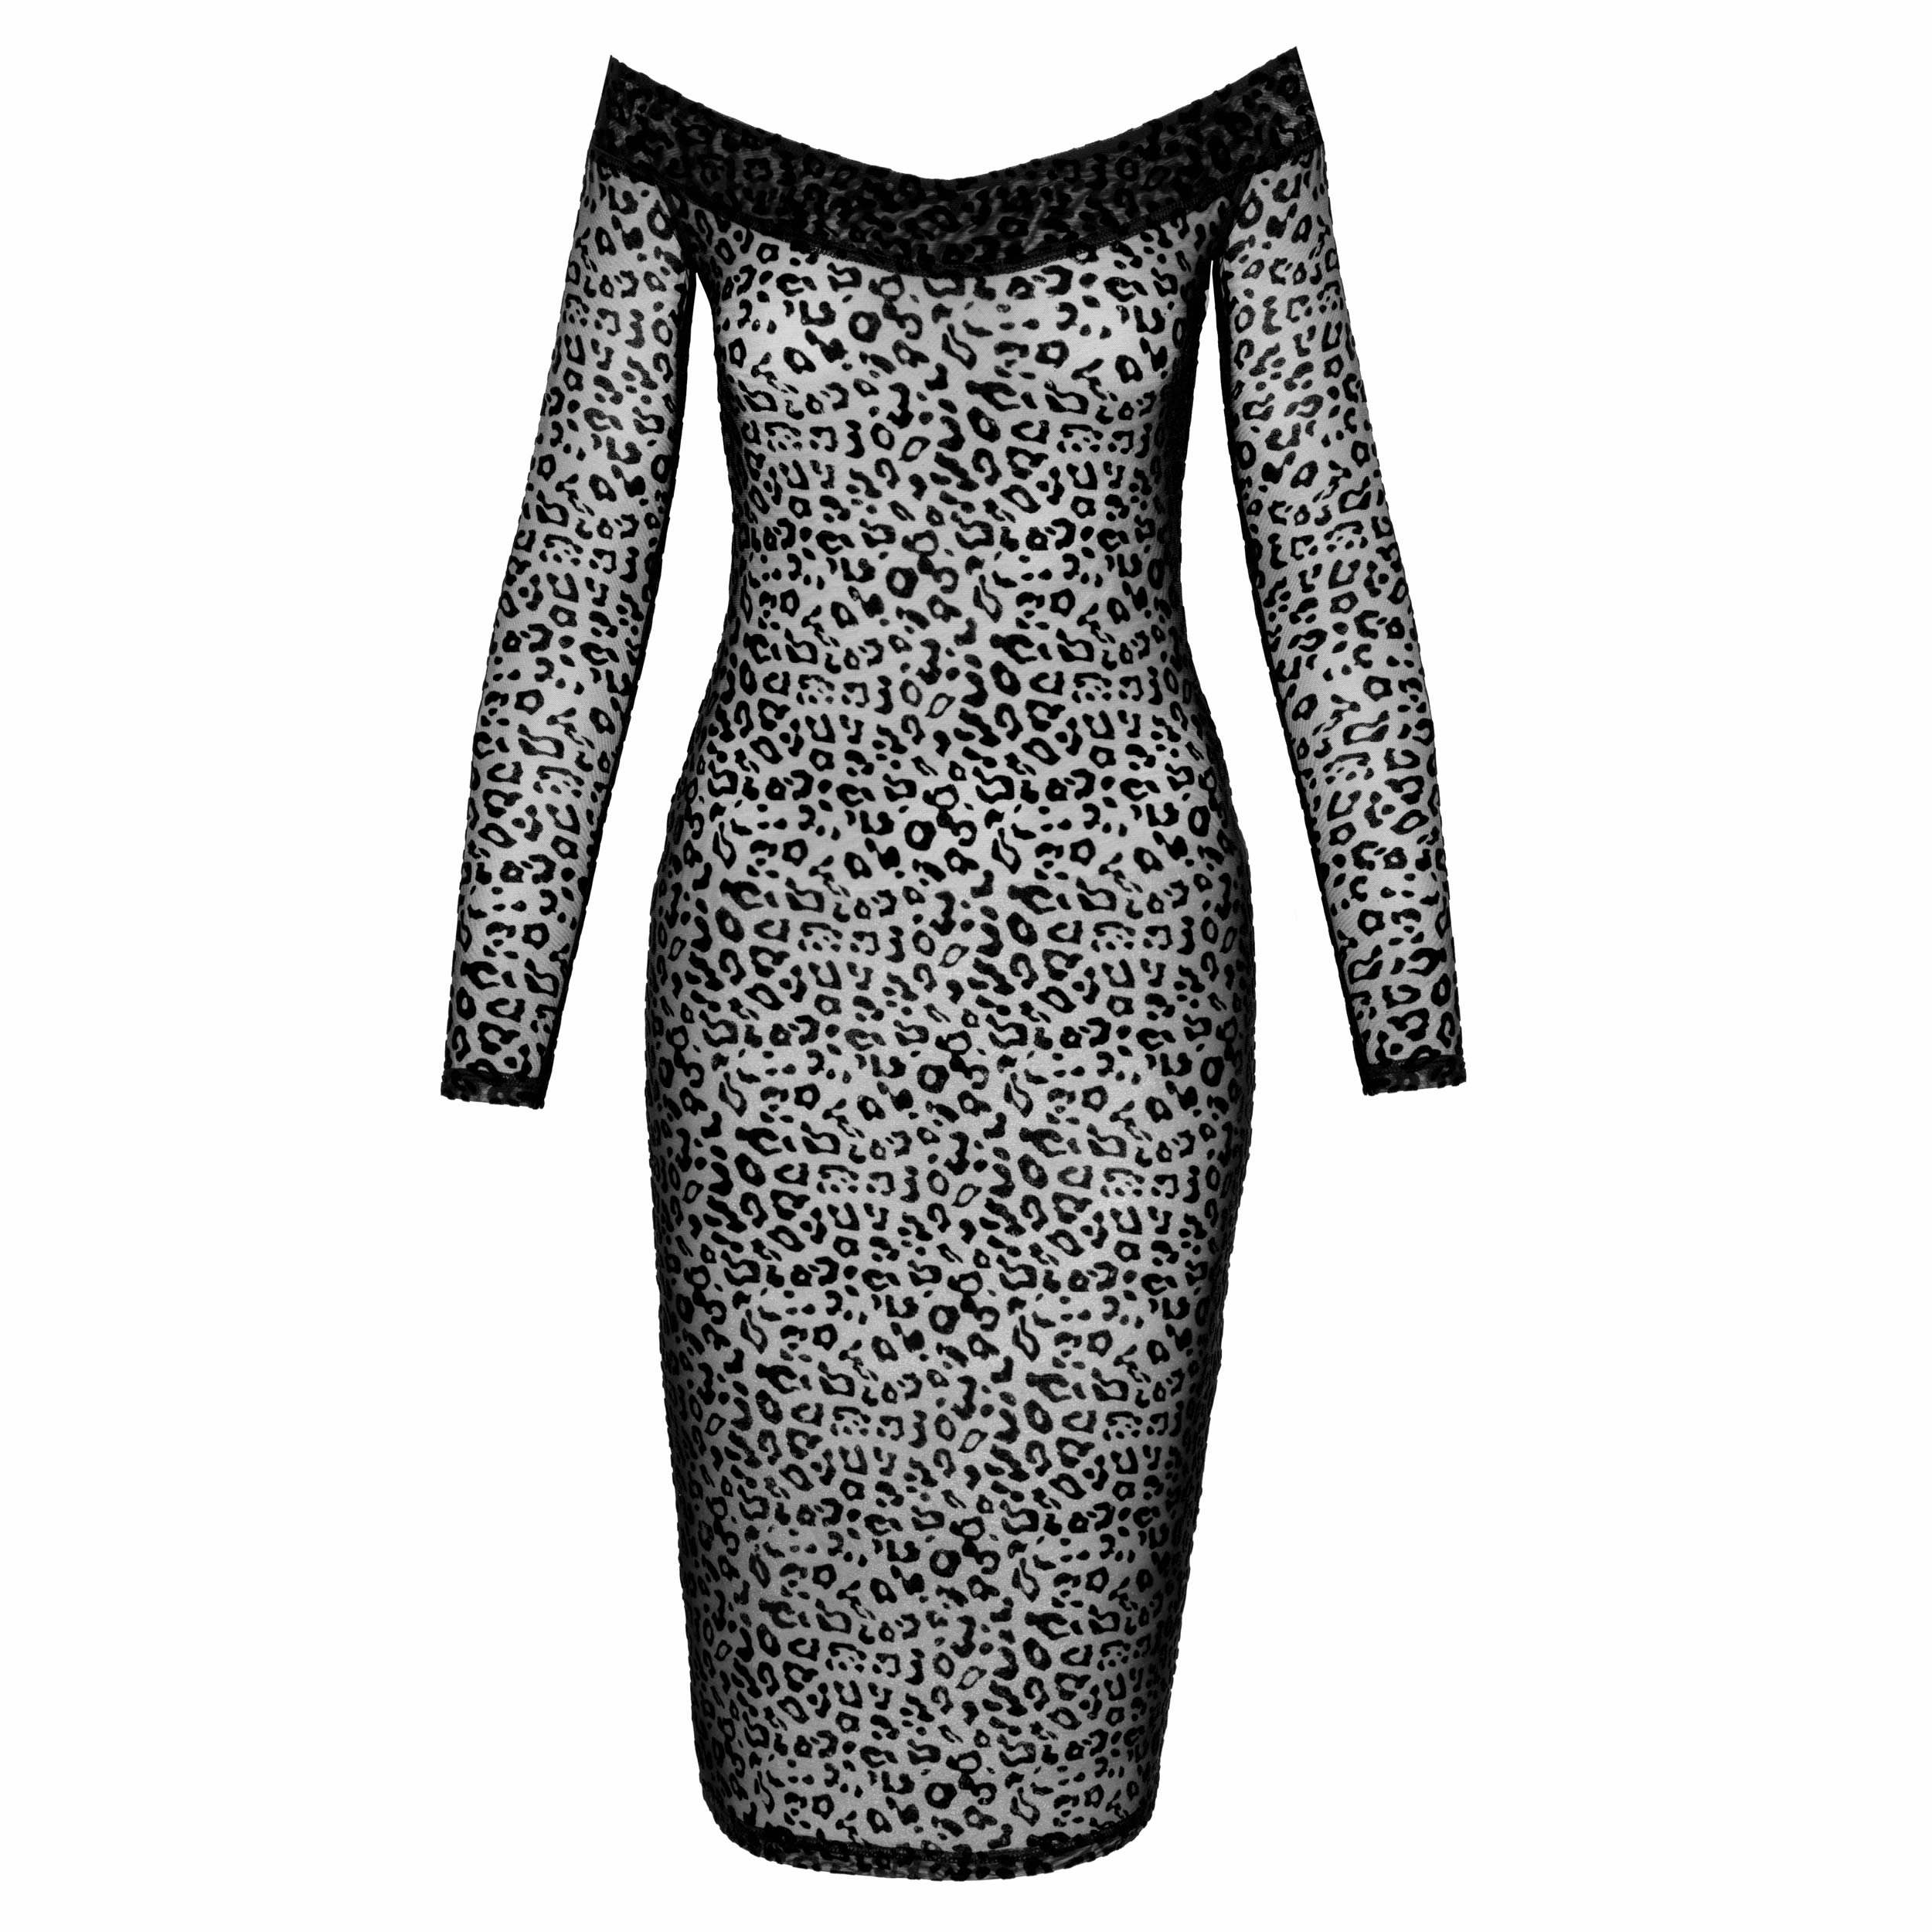 Noir Leopard Nylon Dress with Flock Print and Lace Neckline